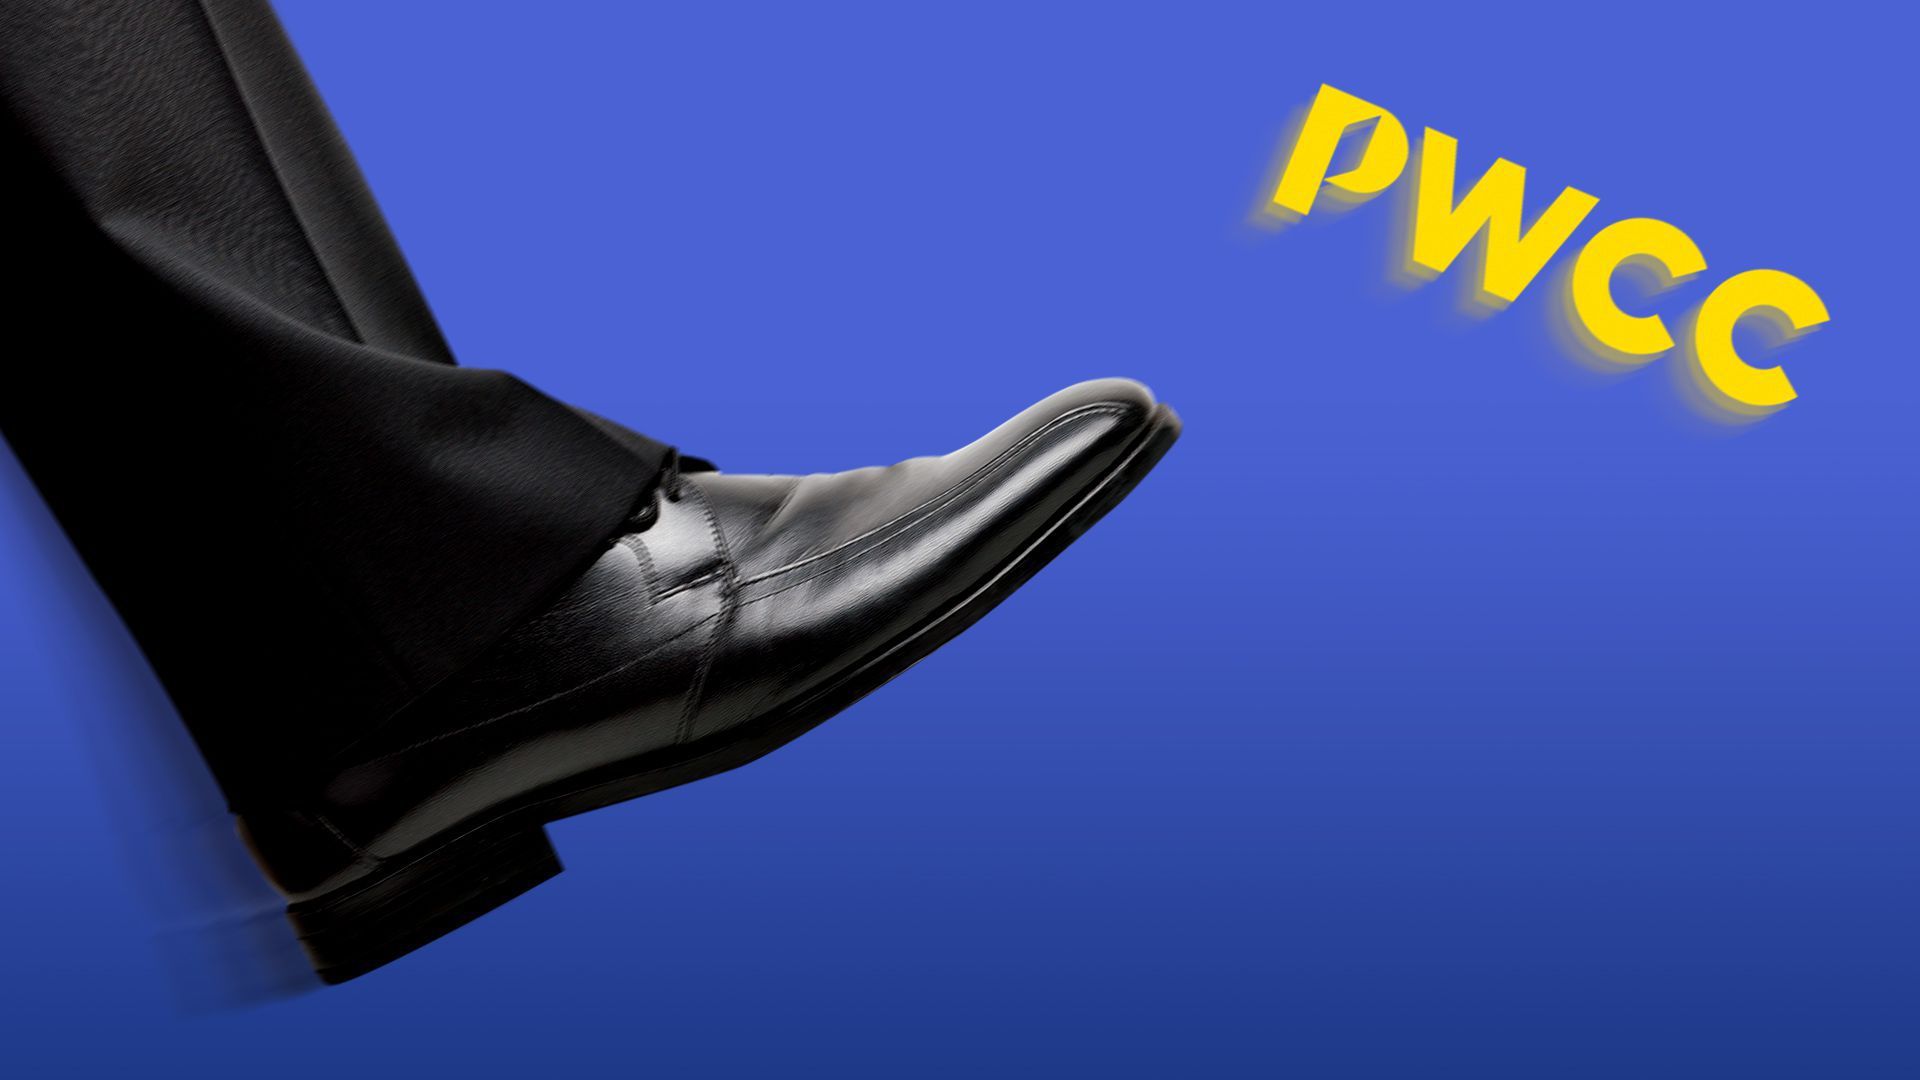 Illustration of a foot kicking the "PWCC" logo.